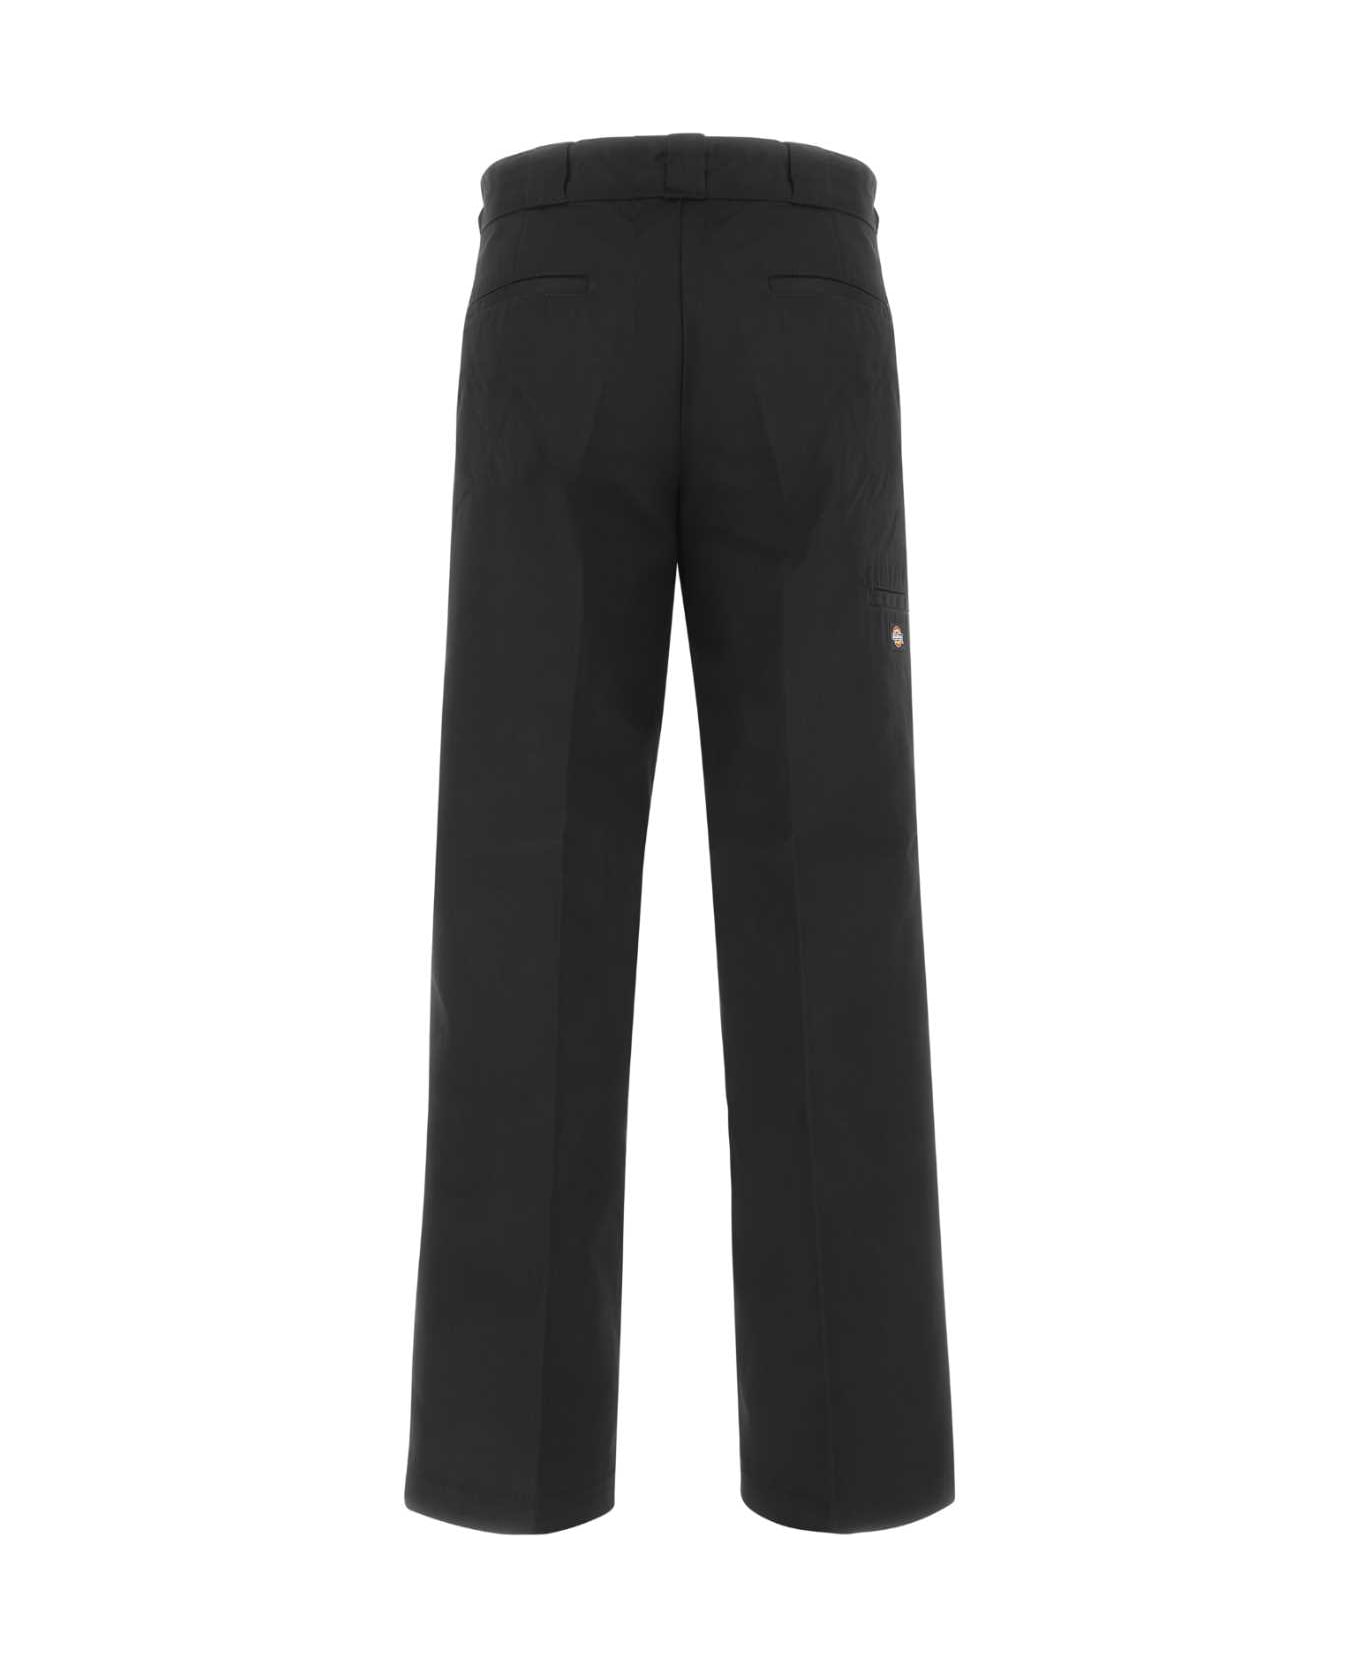 Dickies Black Polyester Blend Pant - BLK1